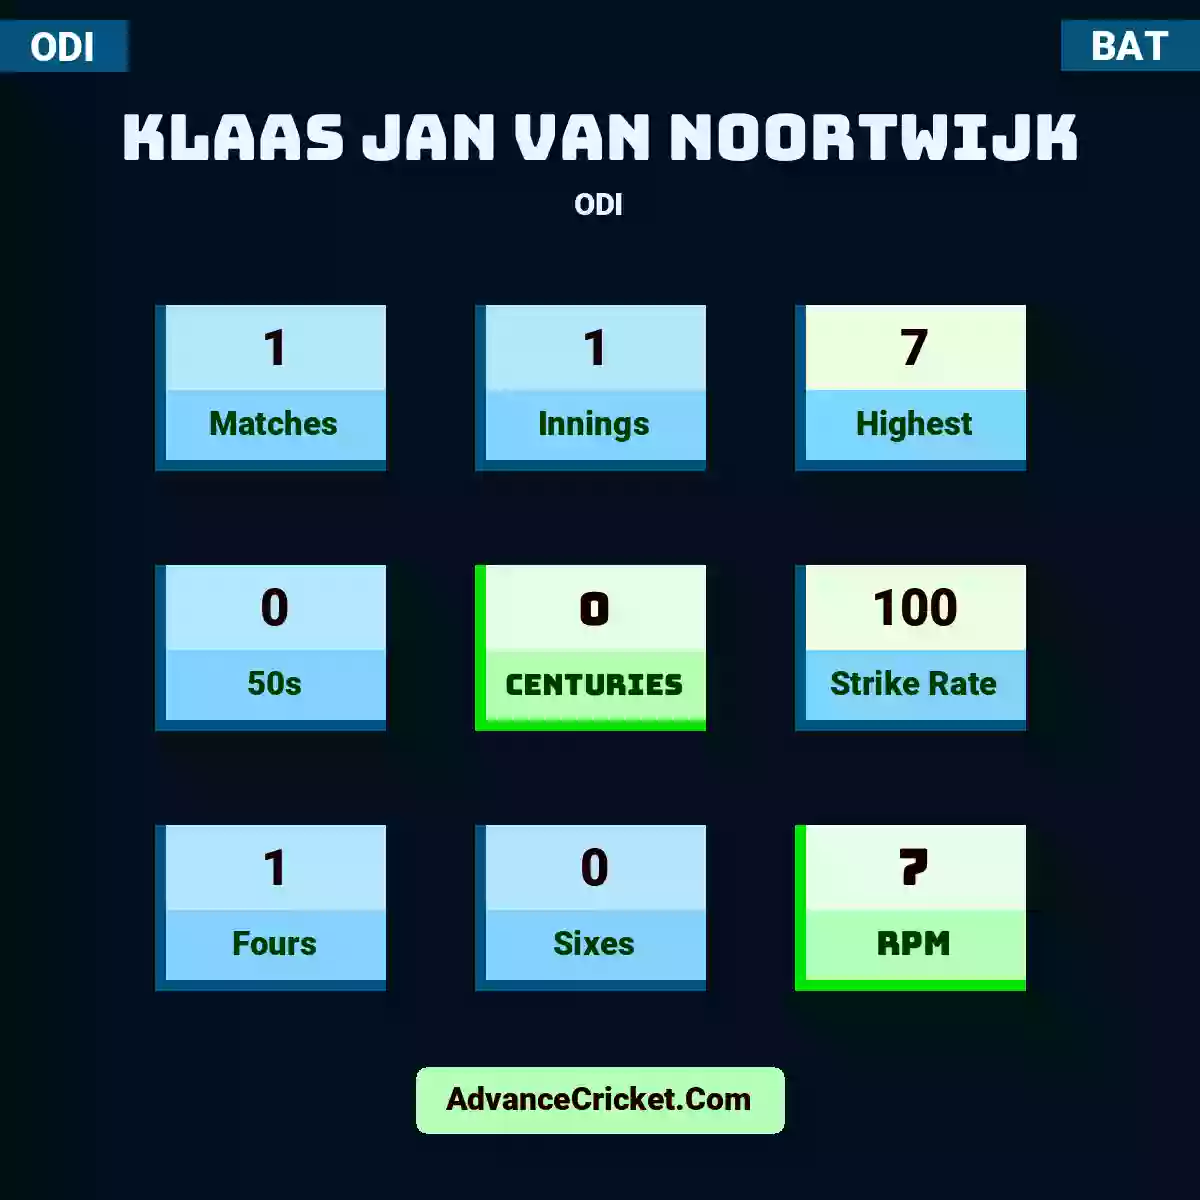 Klaas Jan van Noortwijk ODI , Klaas Jan van Noortwijk played 1 matches, scored 7 runs as highest, 0 half-centuries, and 0 centuries, with a strike rate of 100. K.Noortwijk hit 1 fours and 0 sixes, with an RPM of 7.